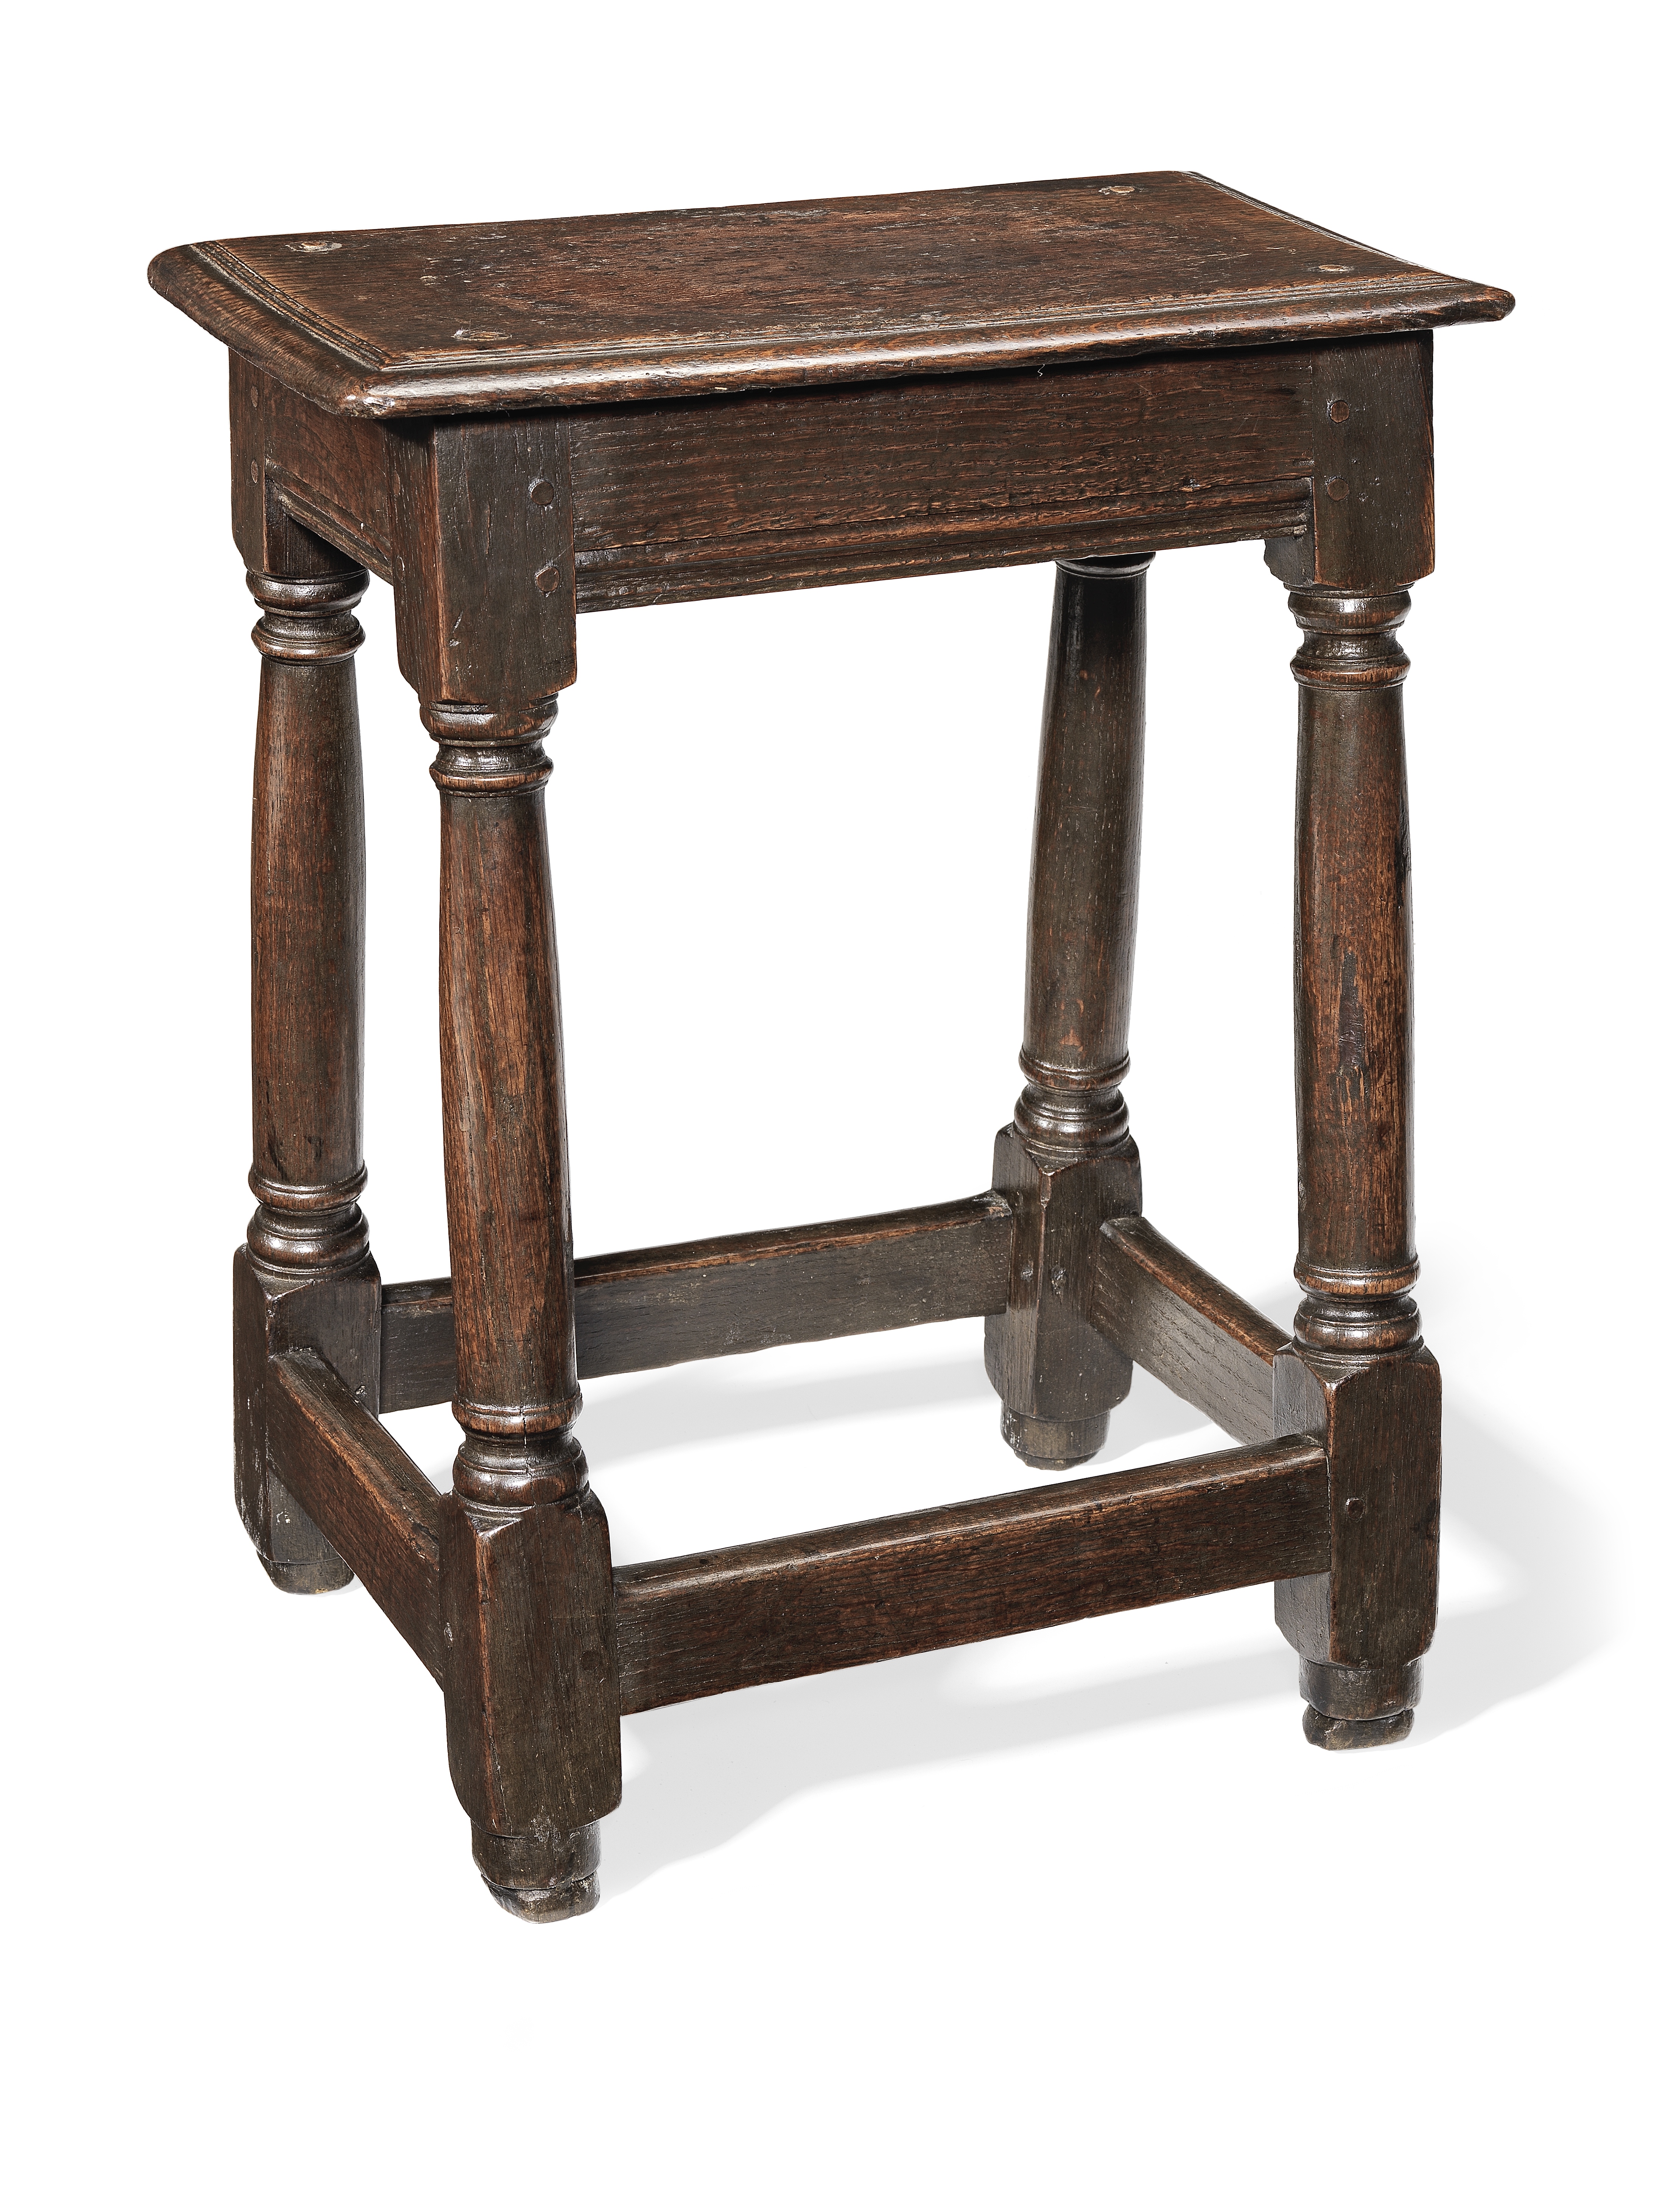 A 17th century oak joint stool